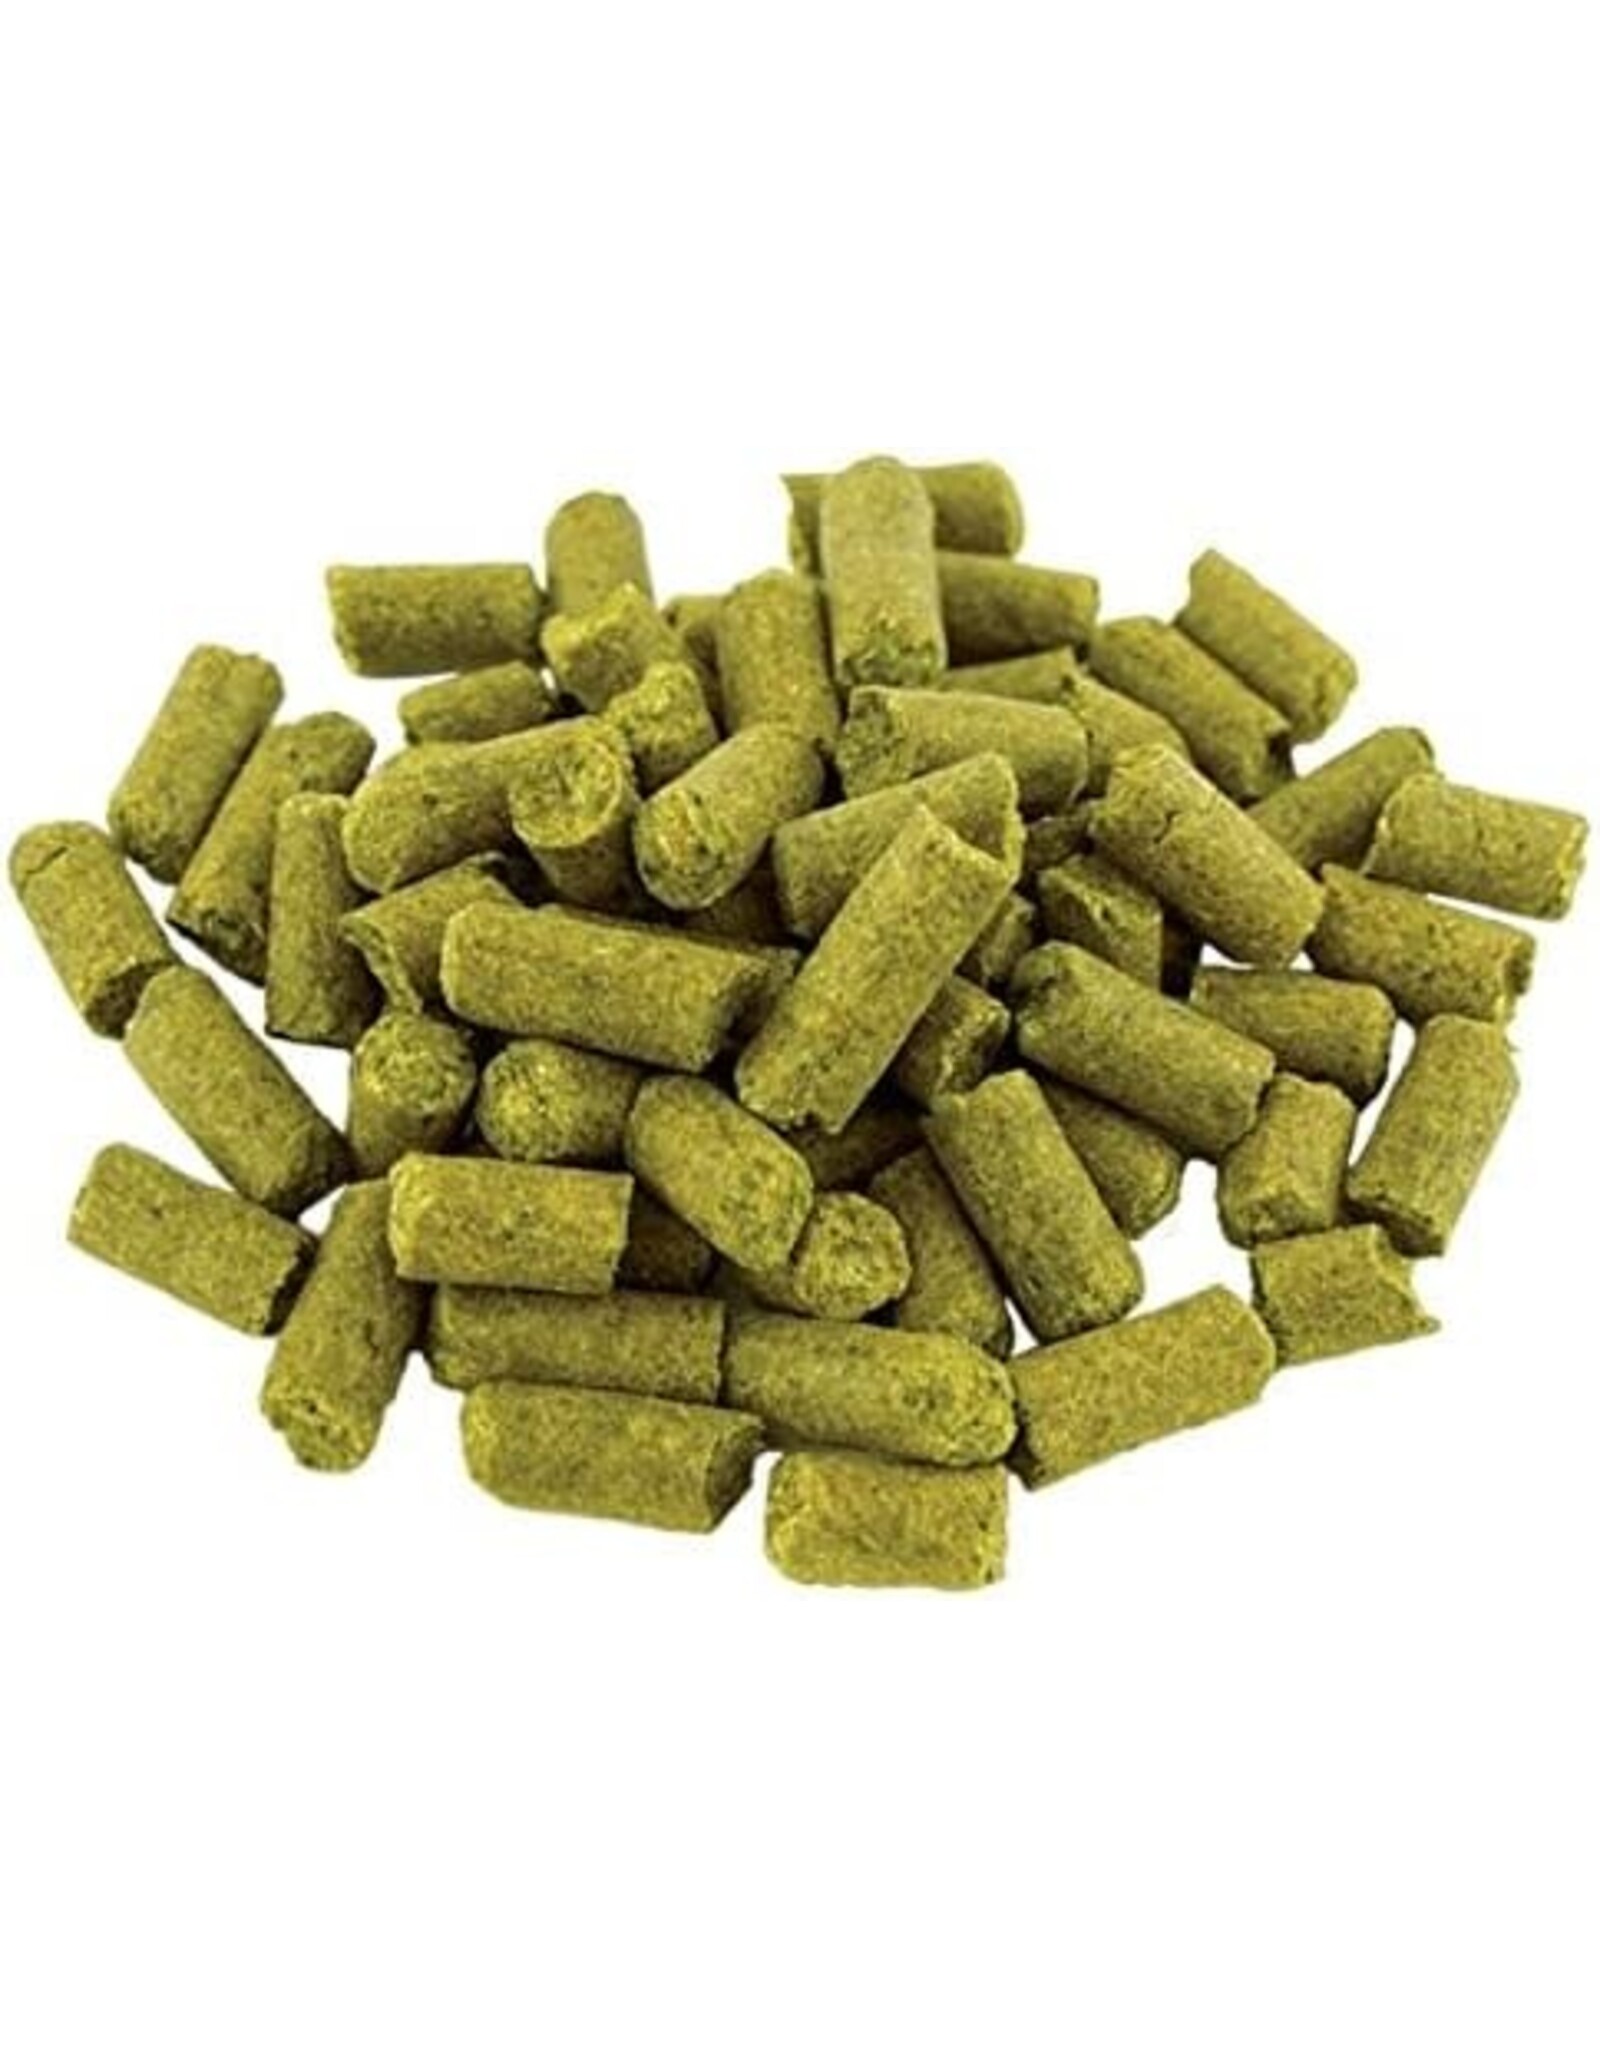 Phoenix UK hop pellets